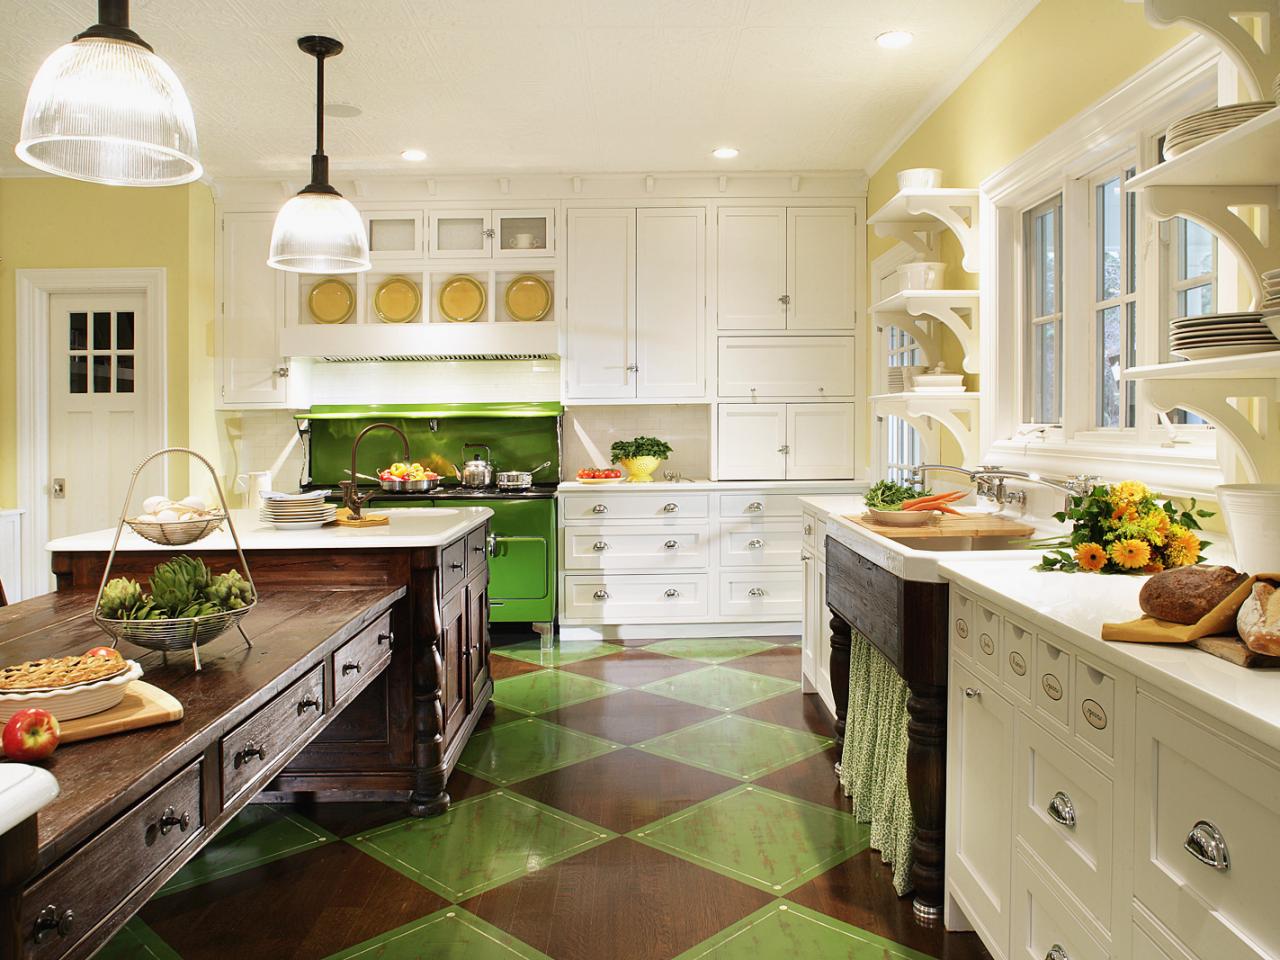 Contemporary Beautiful, Efficient Kitchen Design and Layout Ideas kitchen theme ideas